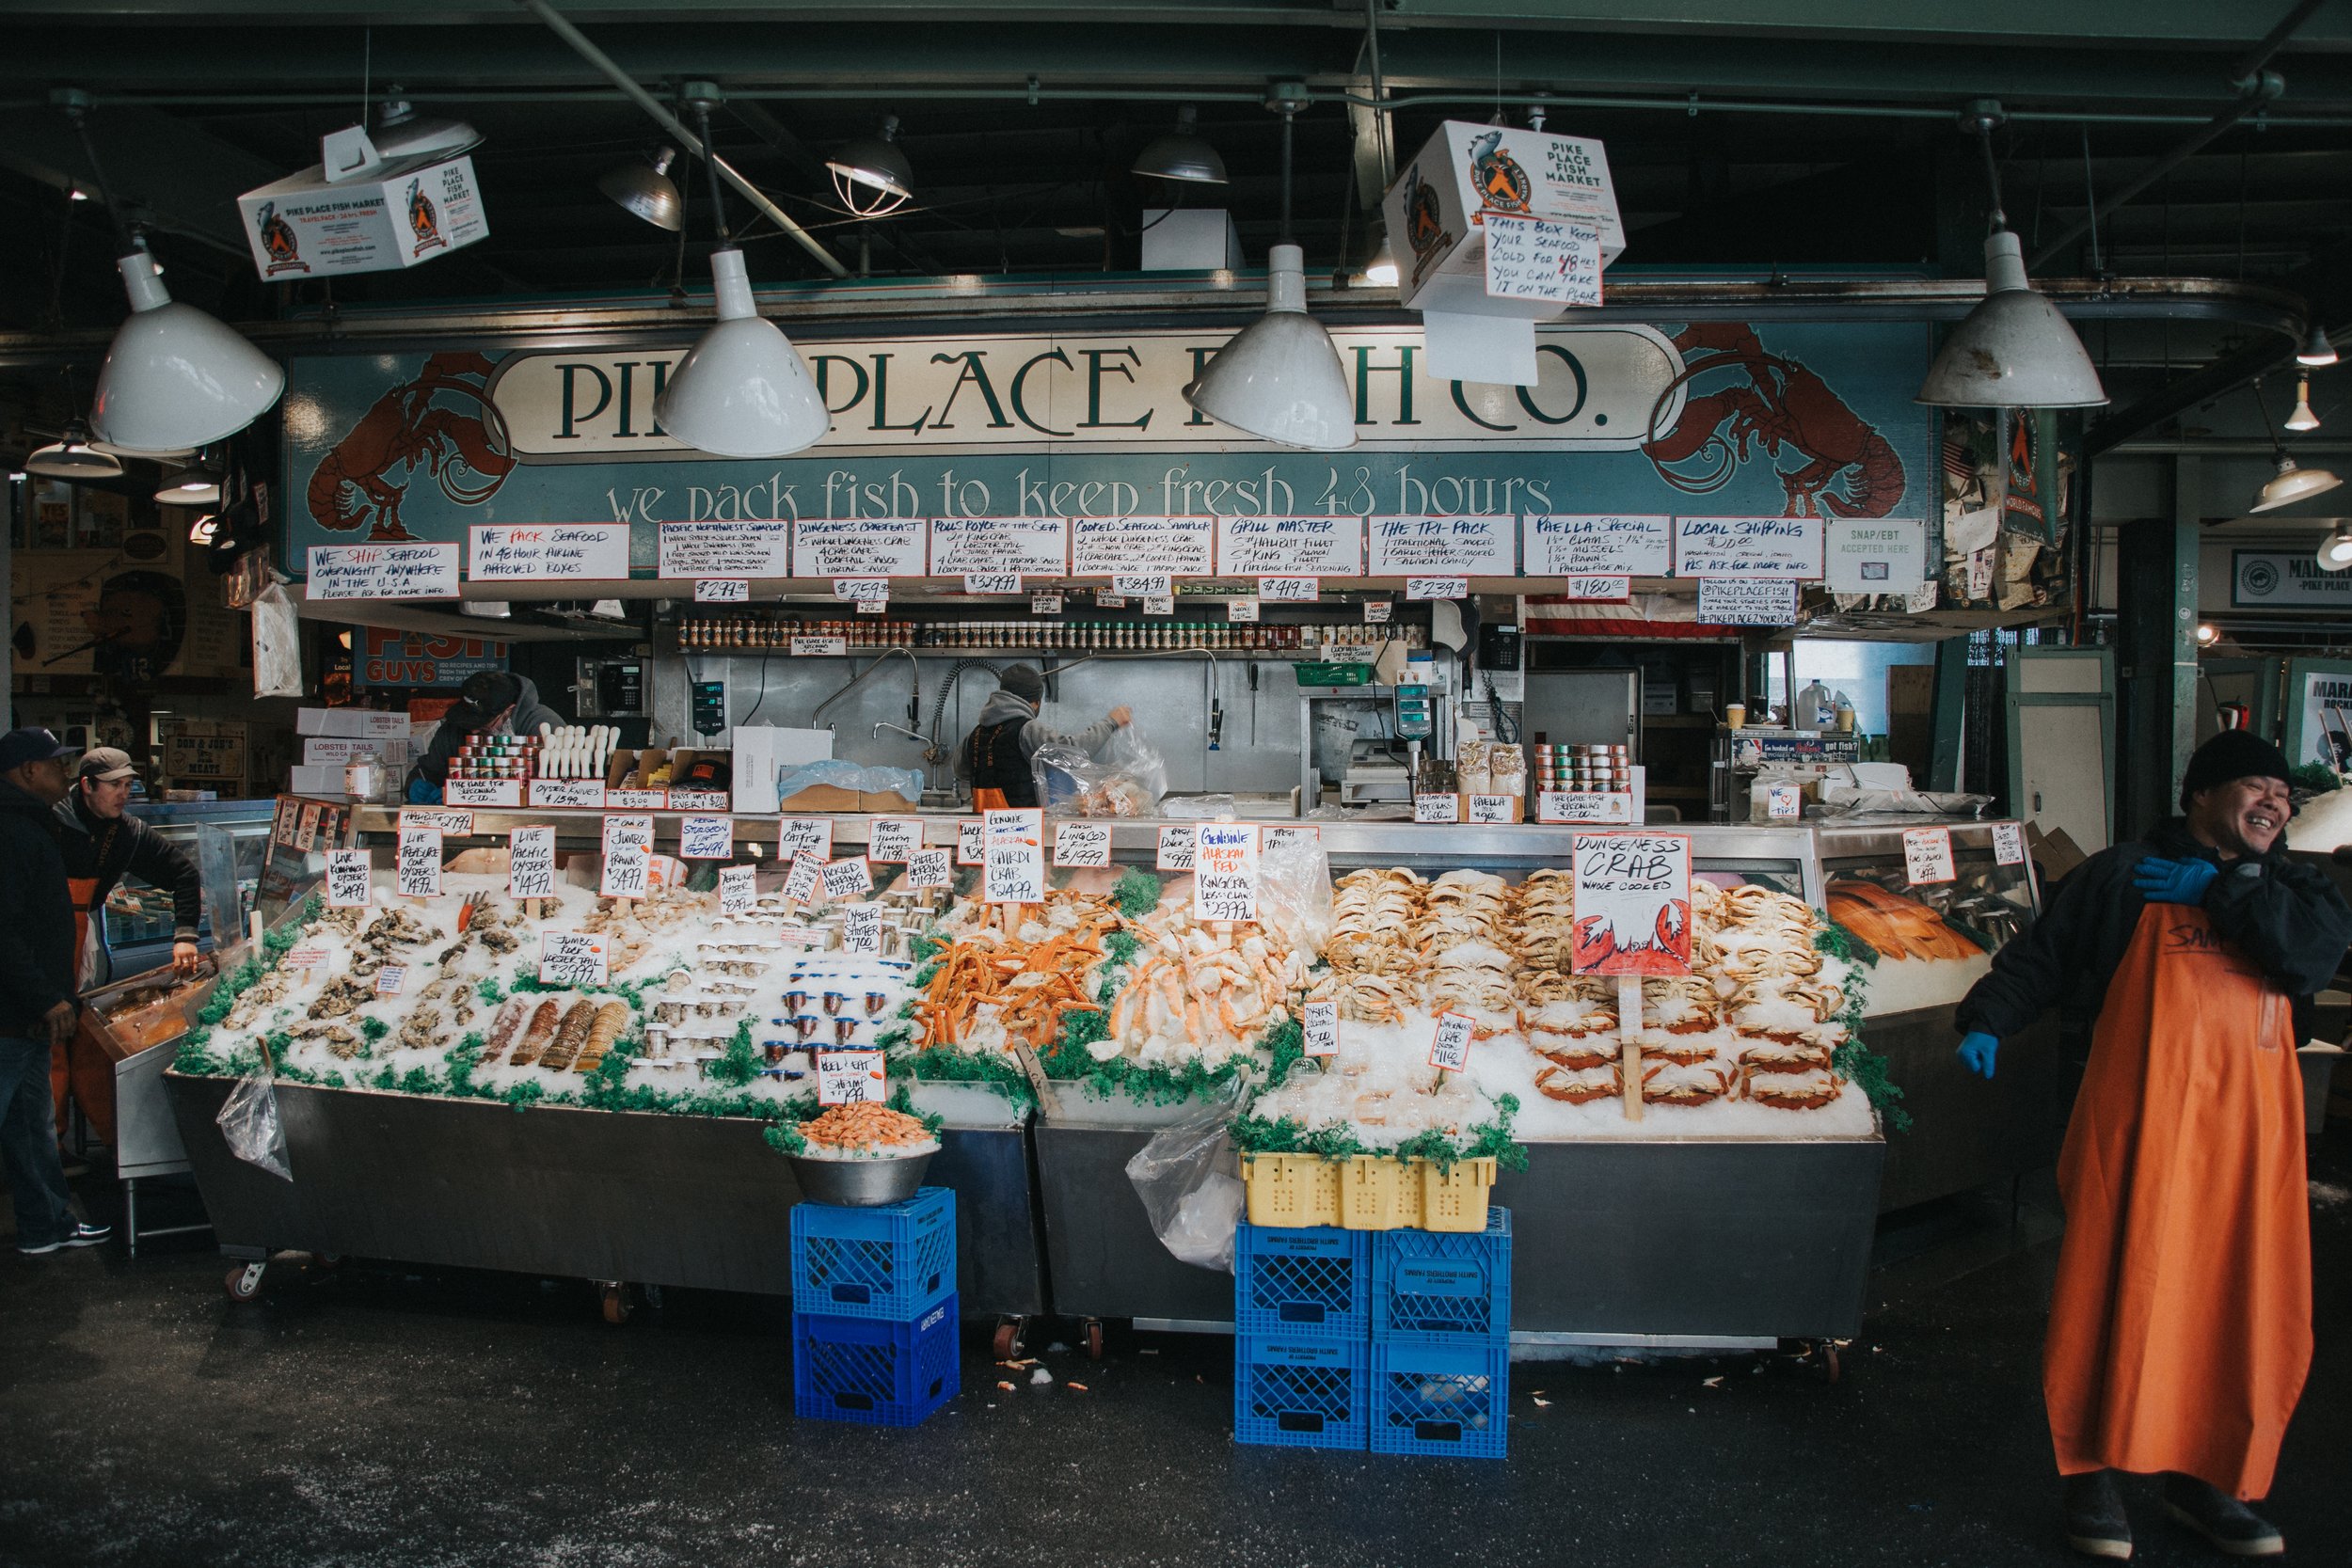 Insiders guide to seattle -public market fish stalls - www.letsregale.com.jpg